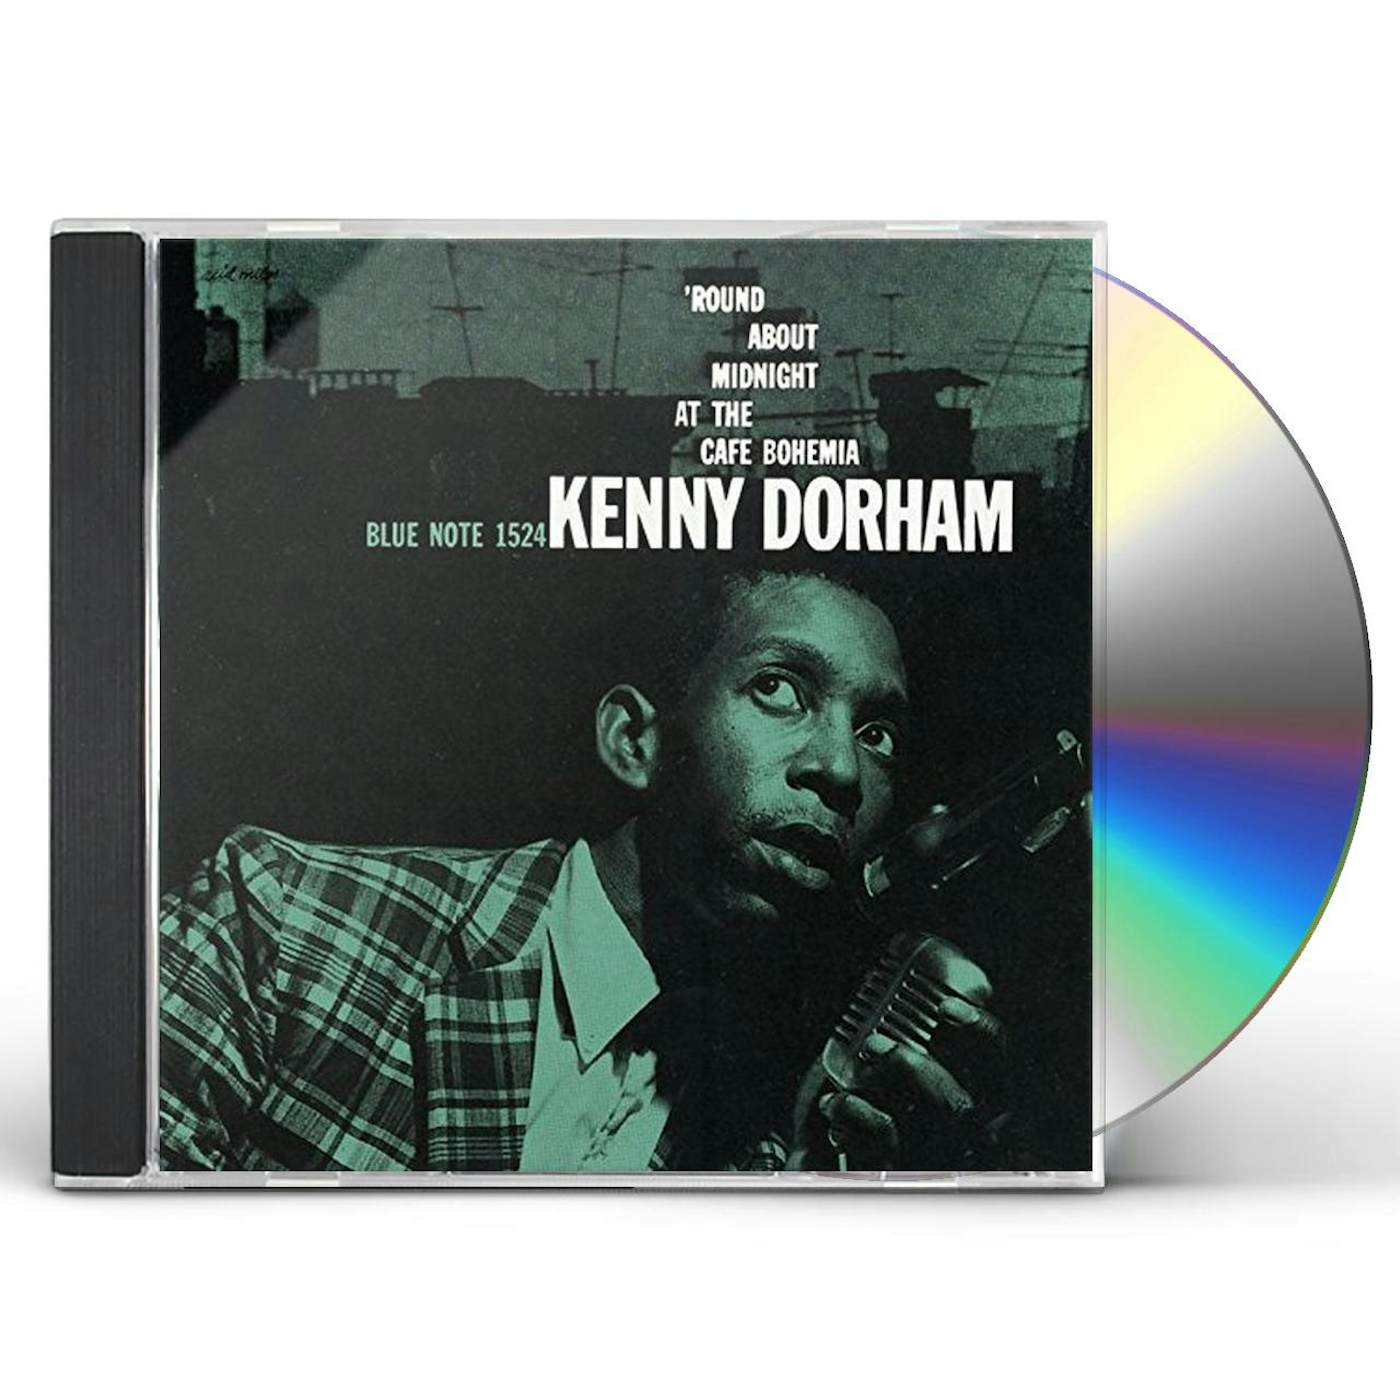 Kenny Dorham ROUND MIDNIGHT AT THE CAFE BOHEMIA CD